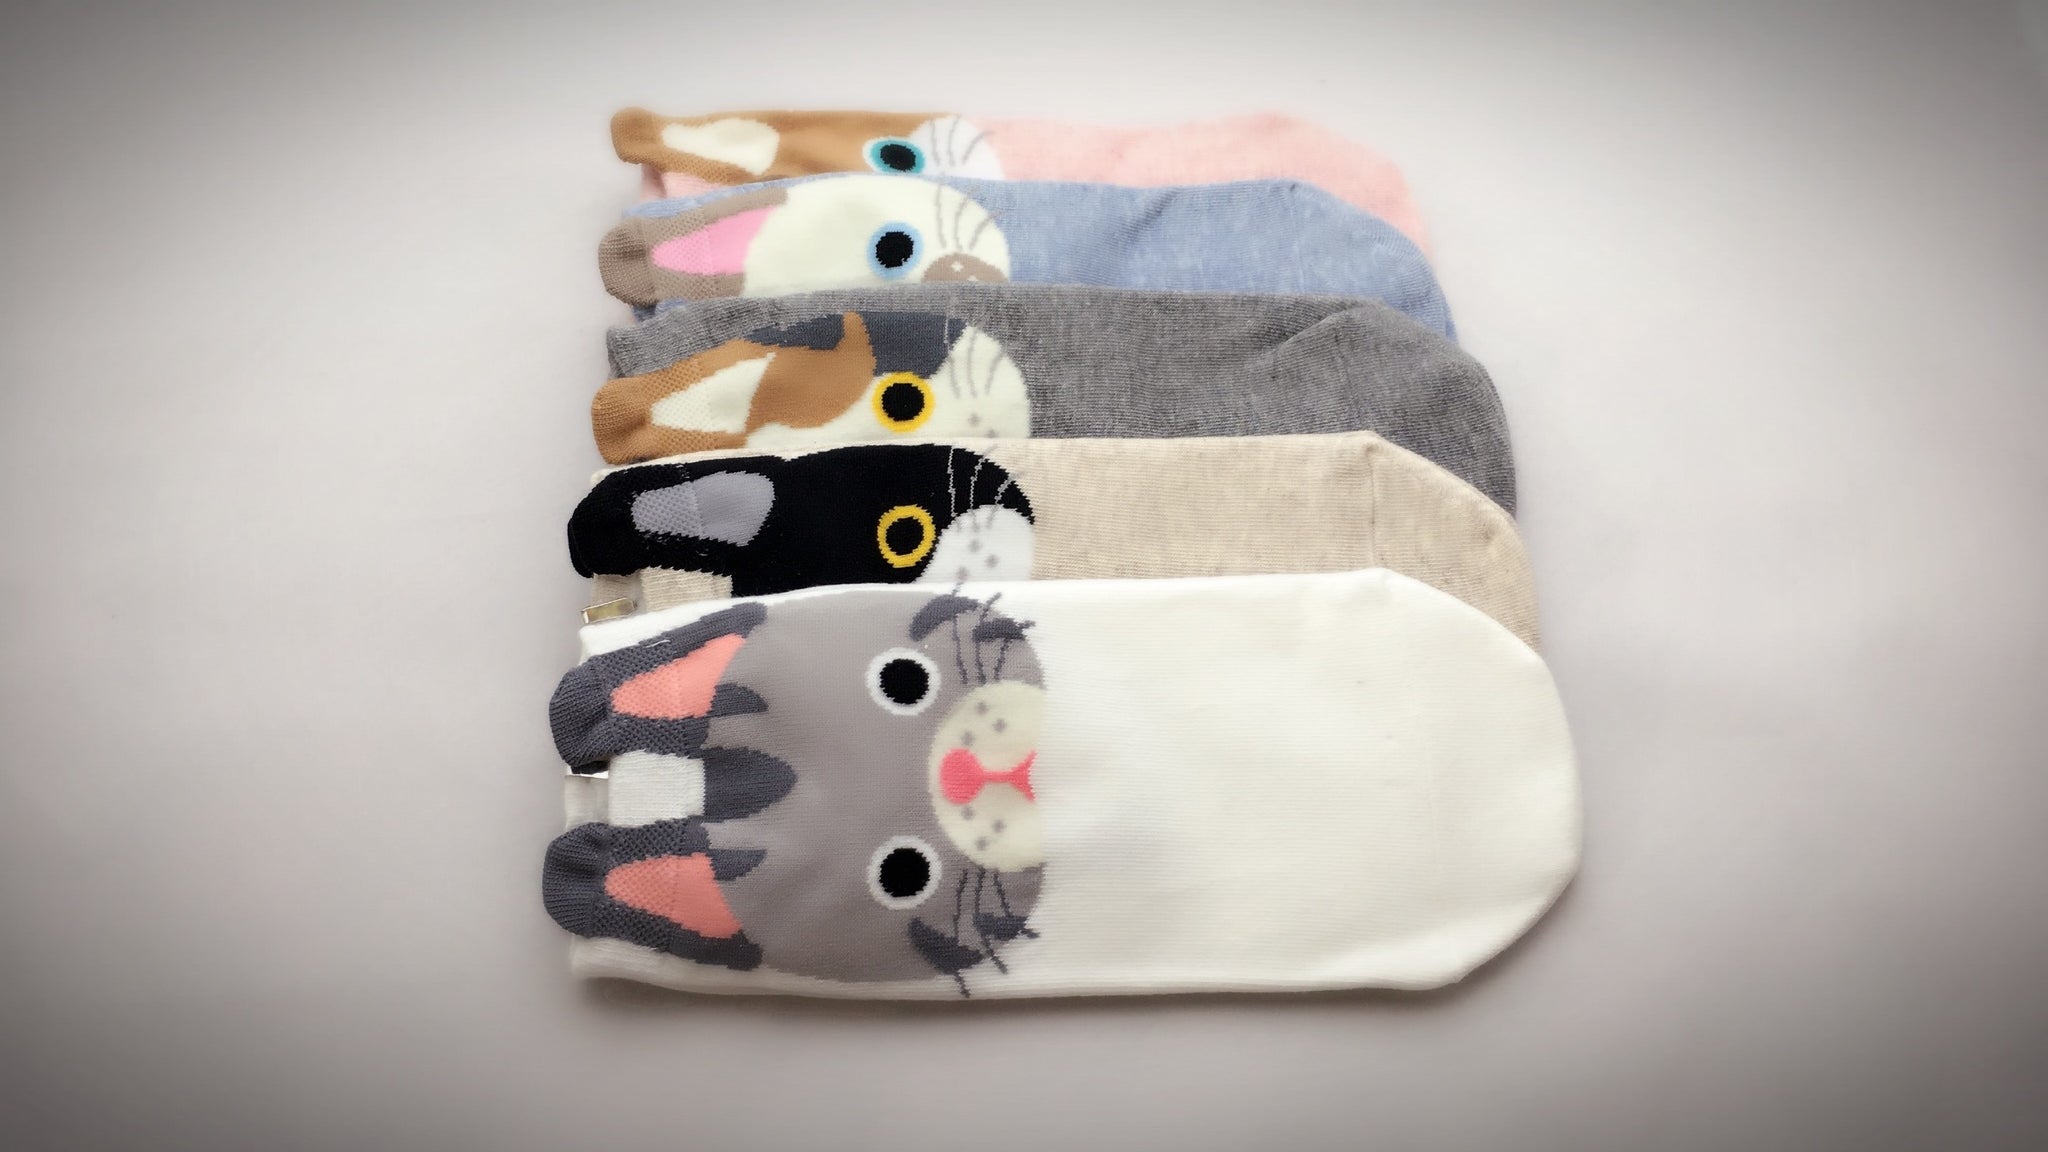 Cute socks, Fun, Quality Korean socks, Cat print ankle socks – GotYourToes